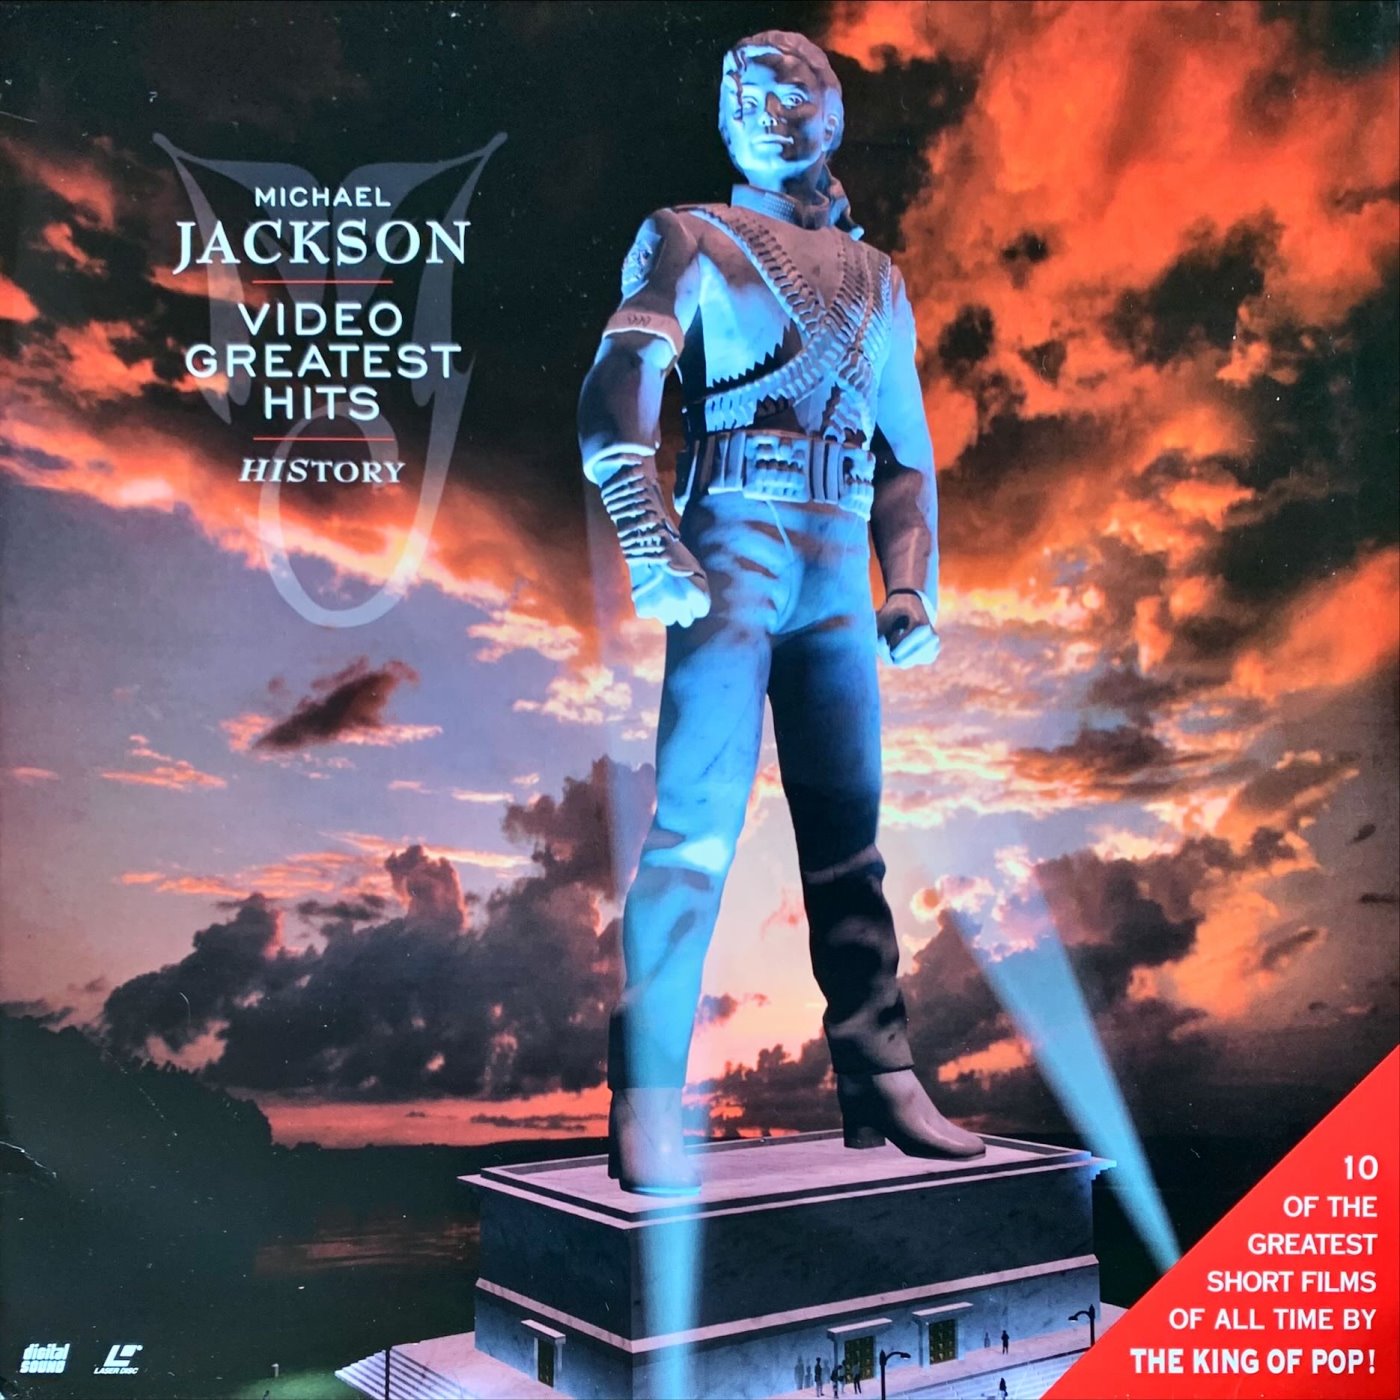 Cover - Michael Jackson Video Greatest Hits - History.jpg